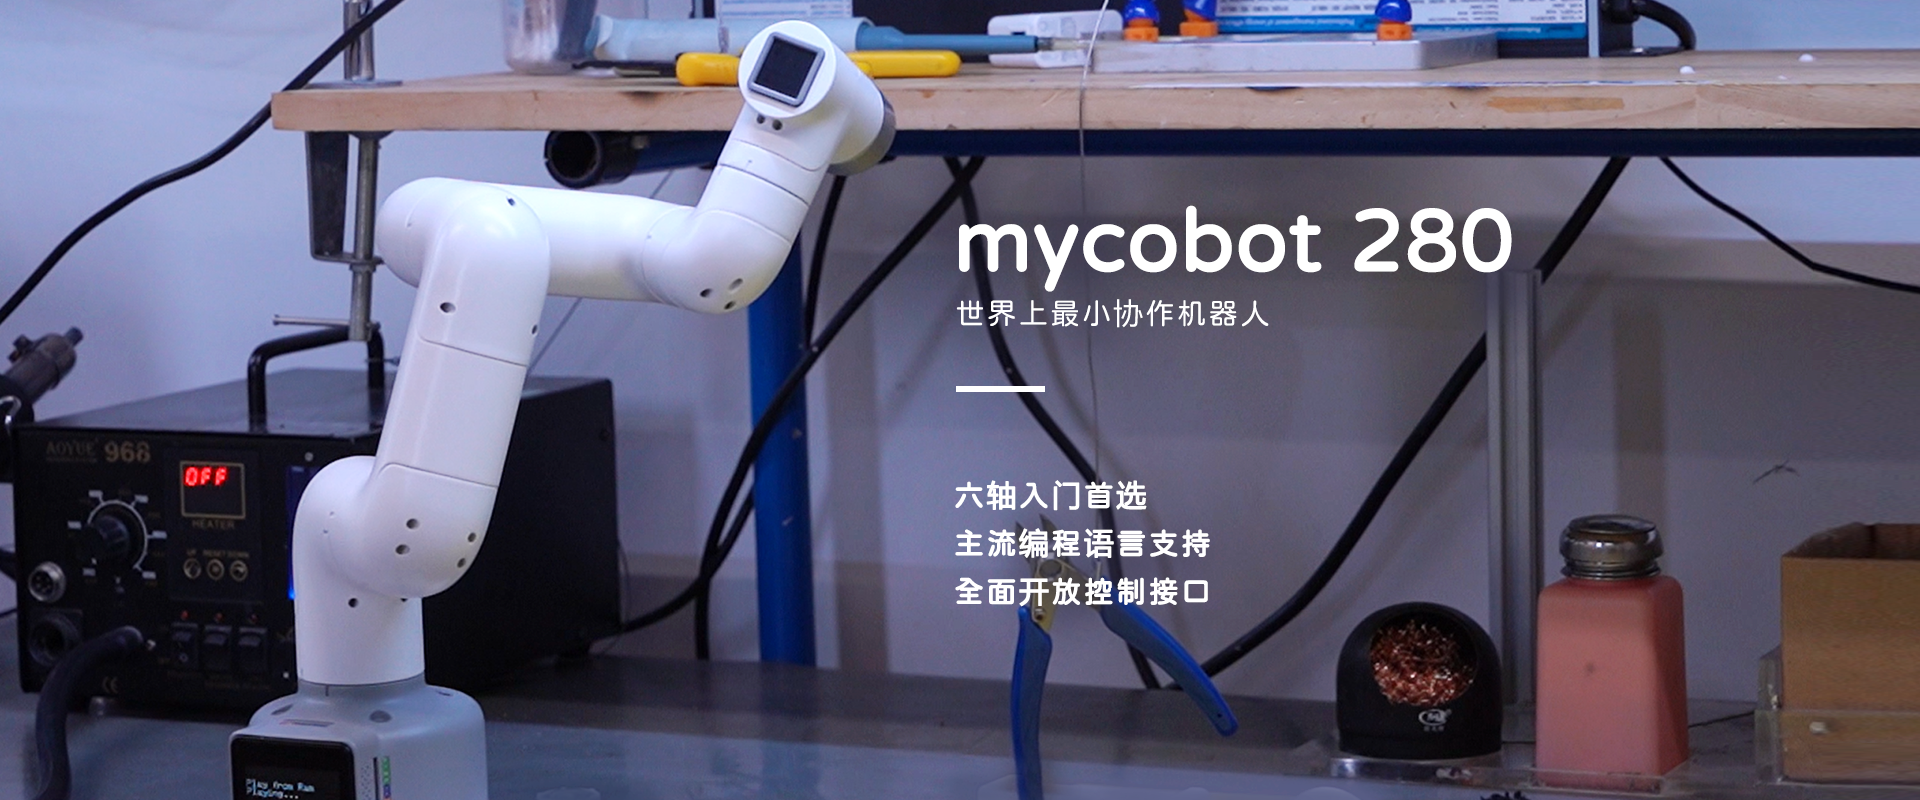 mycobot 280 cn